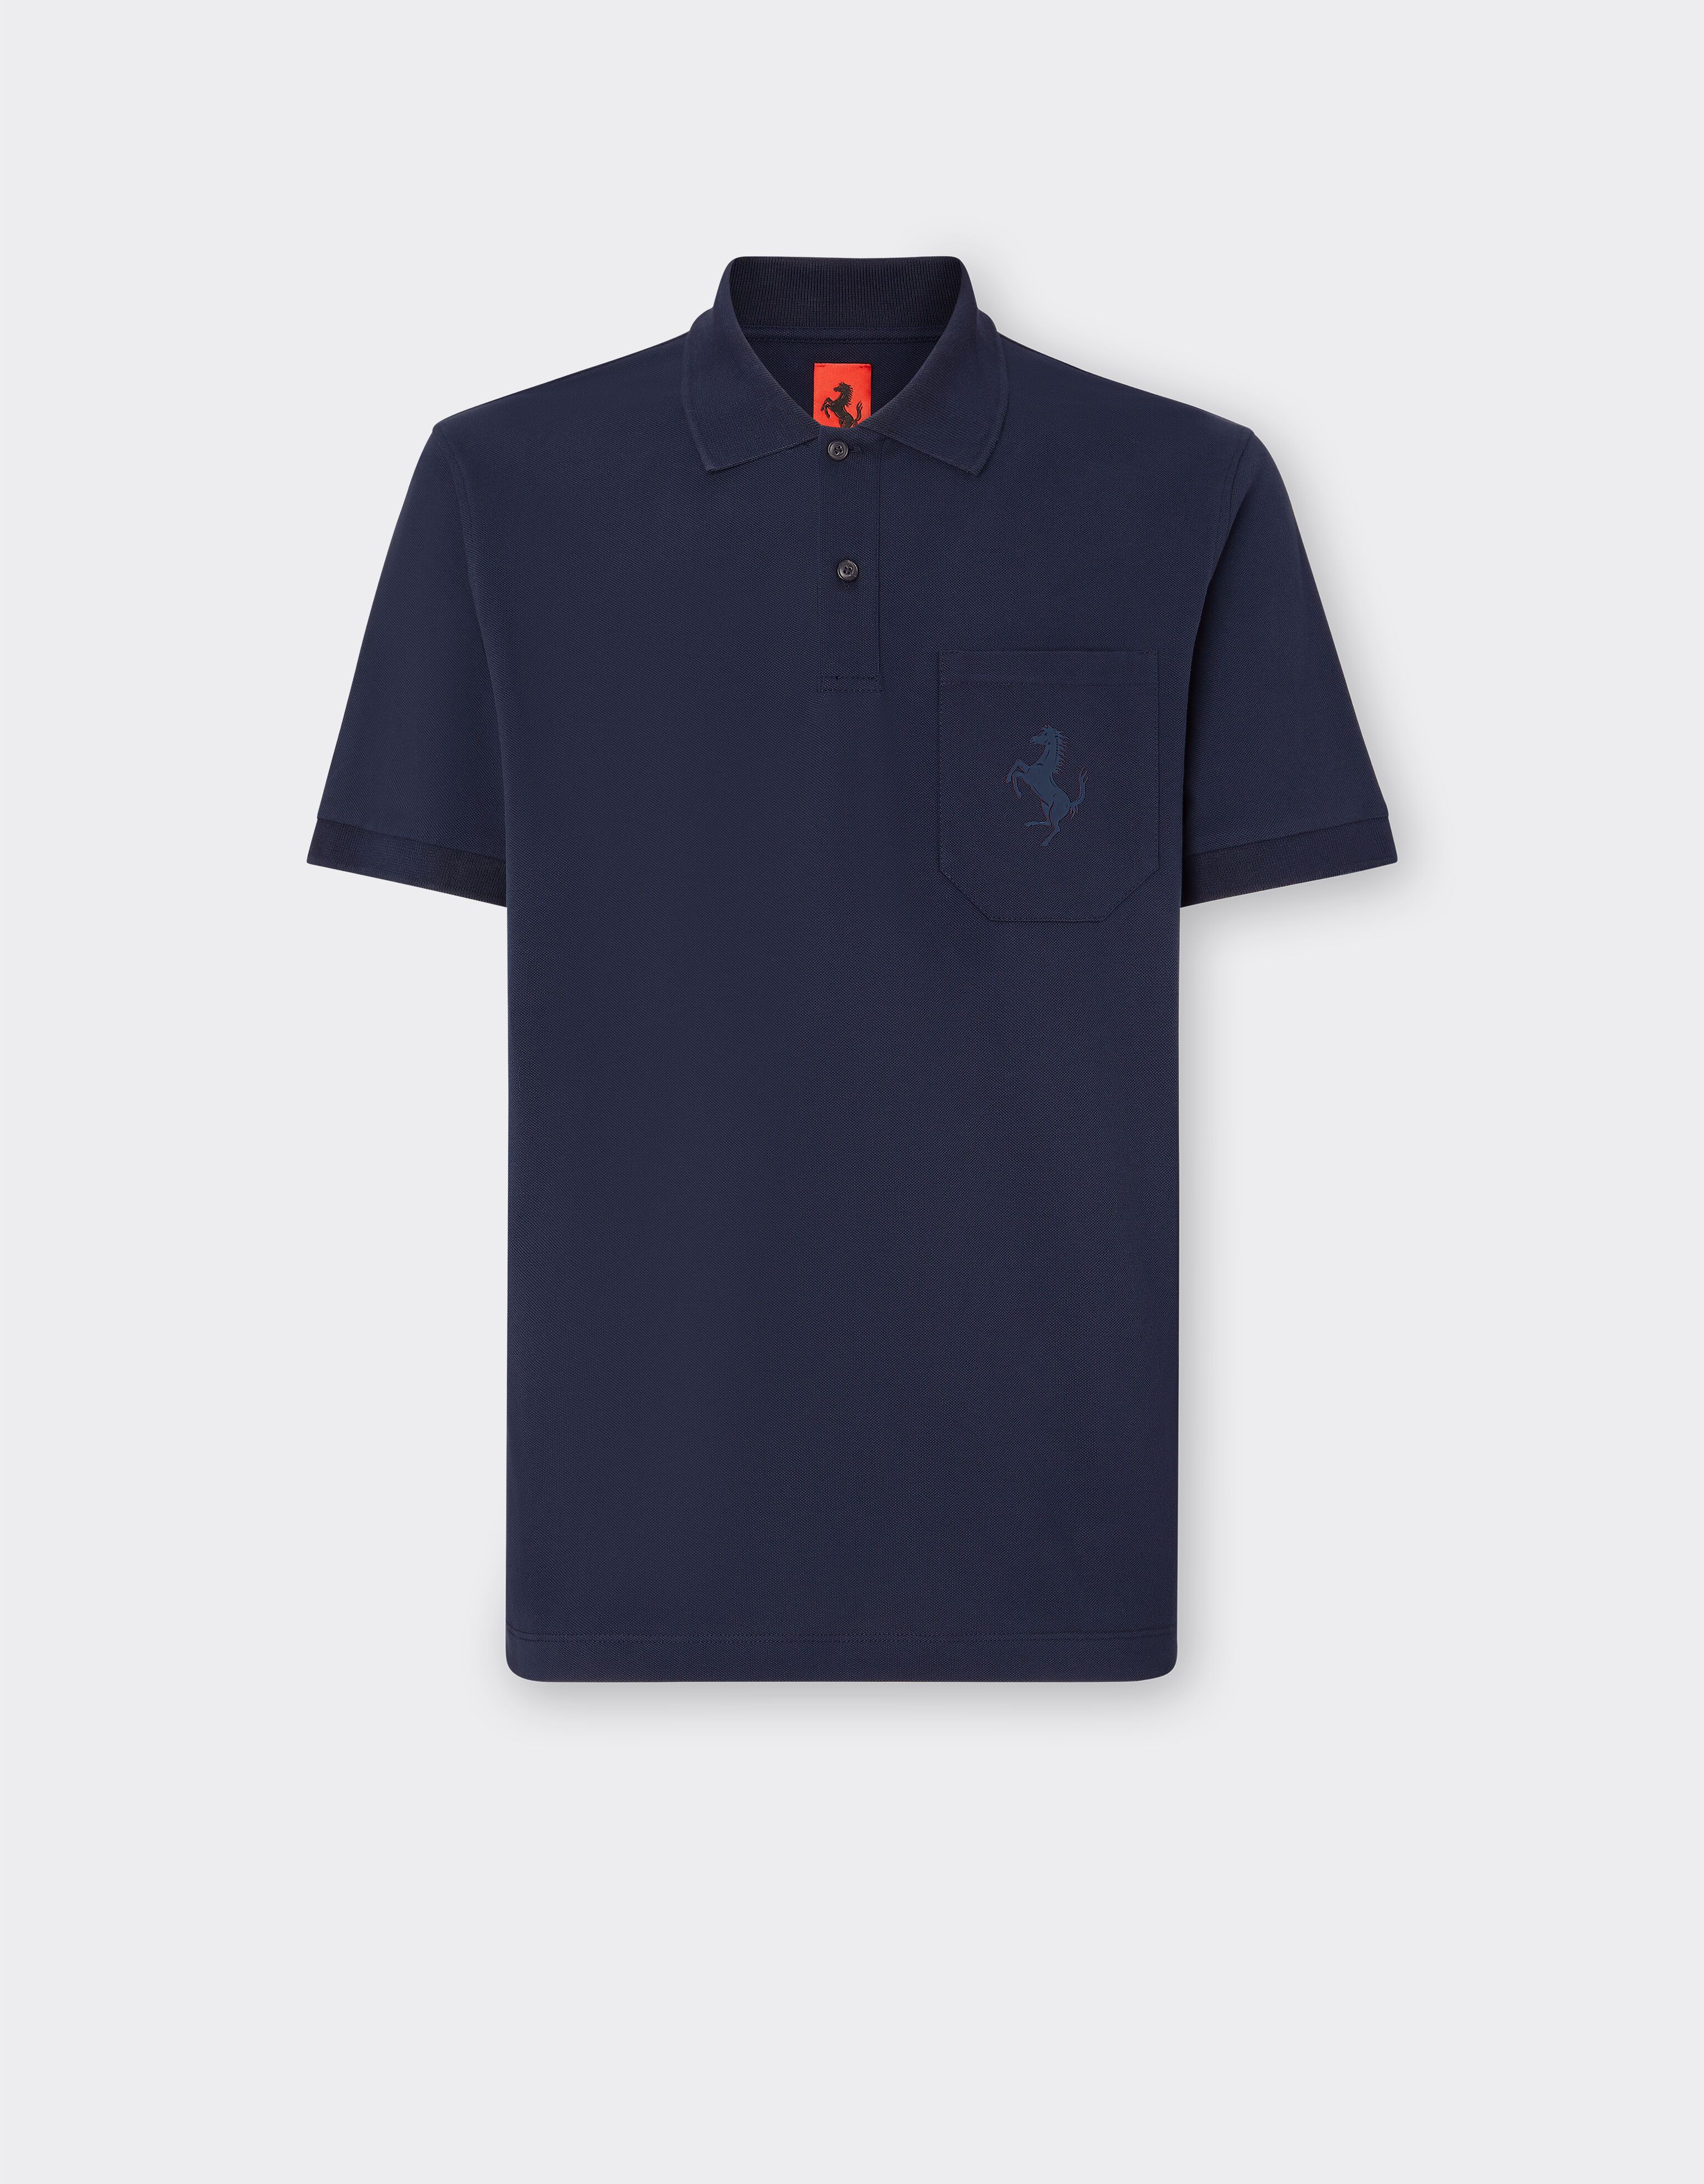 Ferrari Piqué cotton polo shirt with Prancing Horse detail Navy 20132f